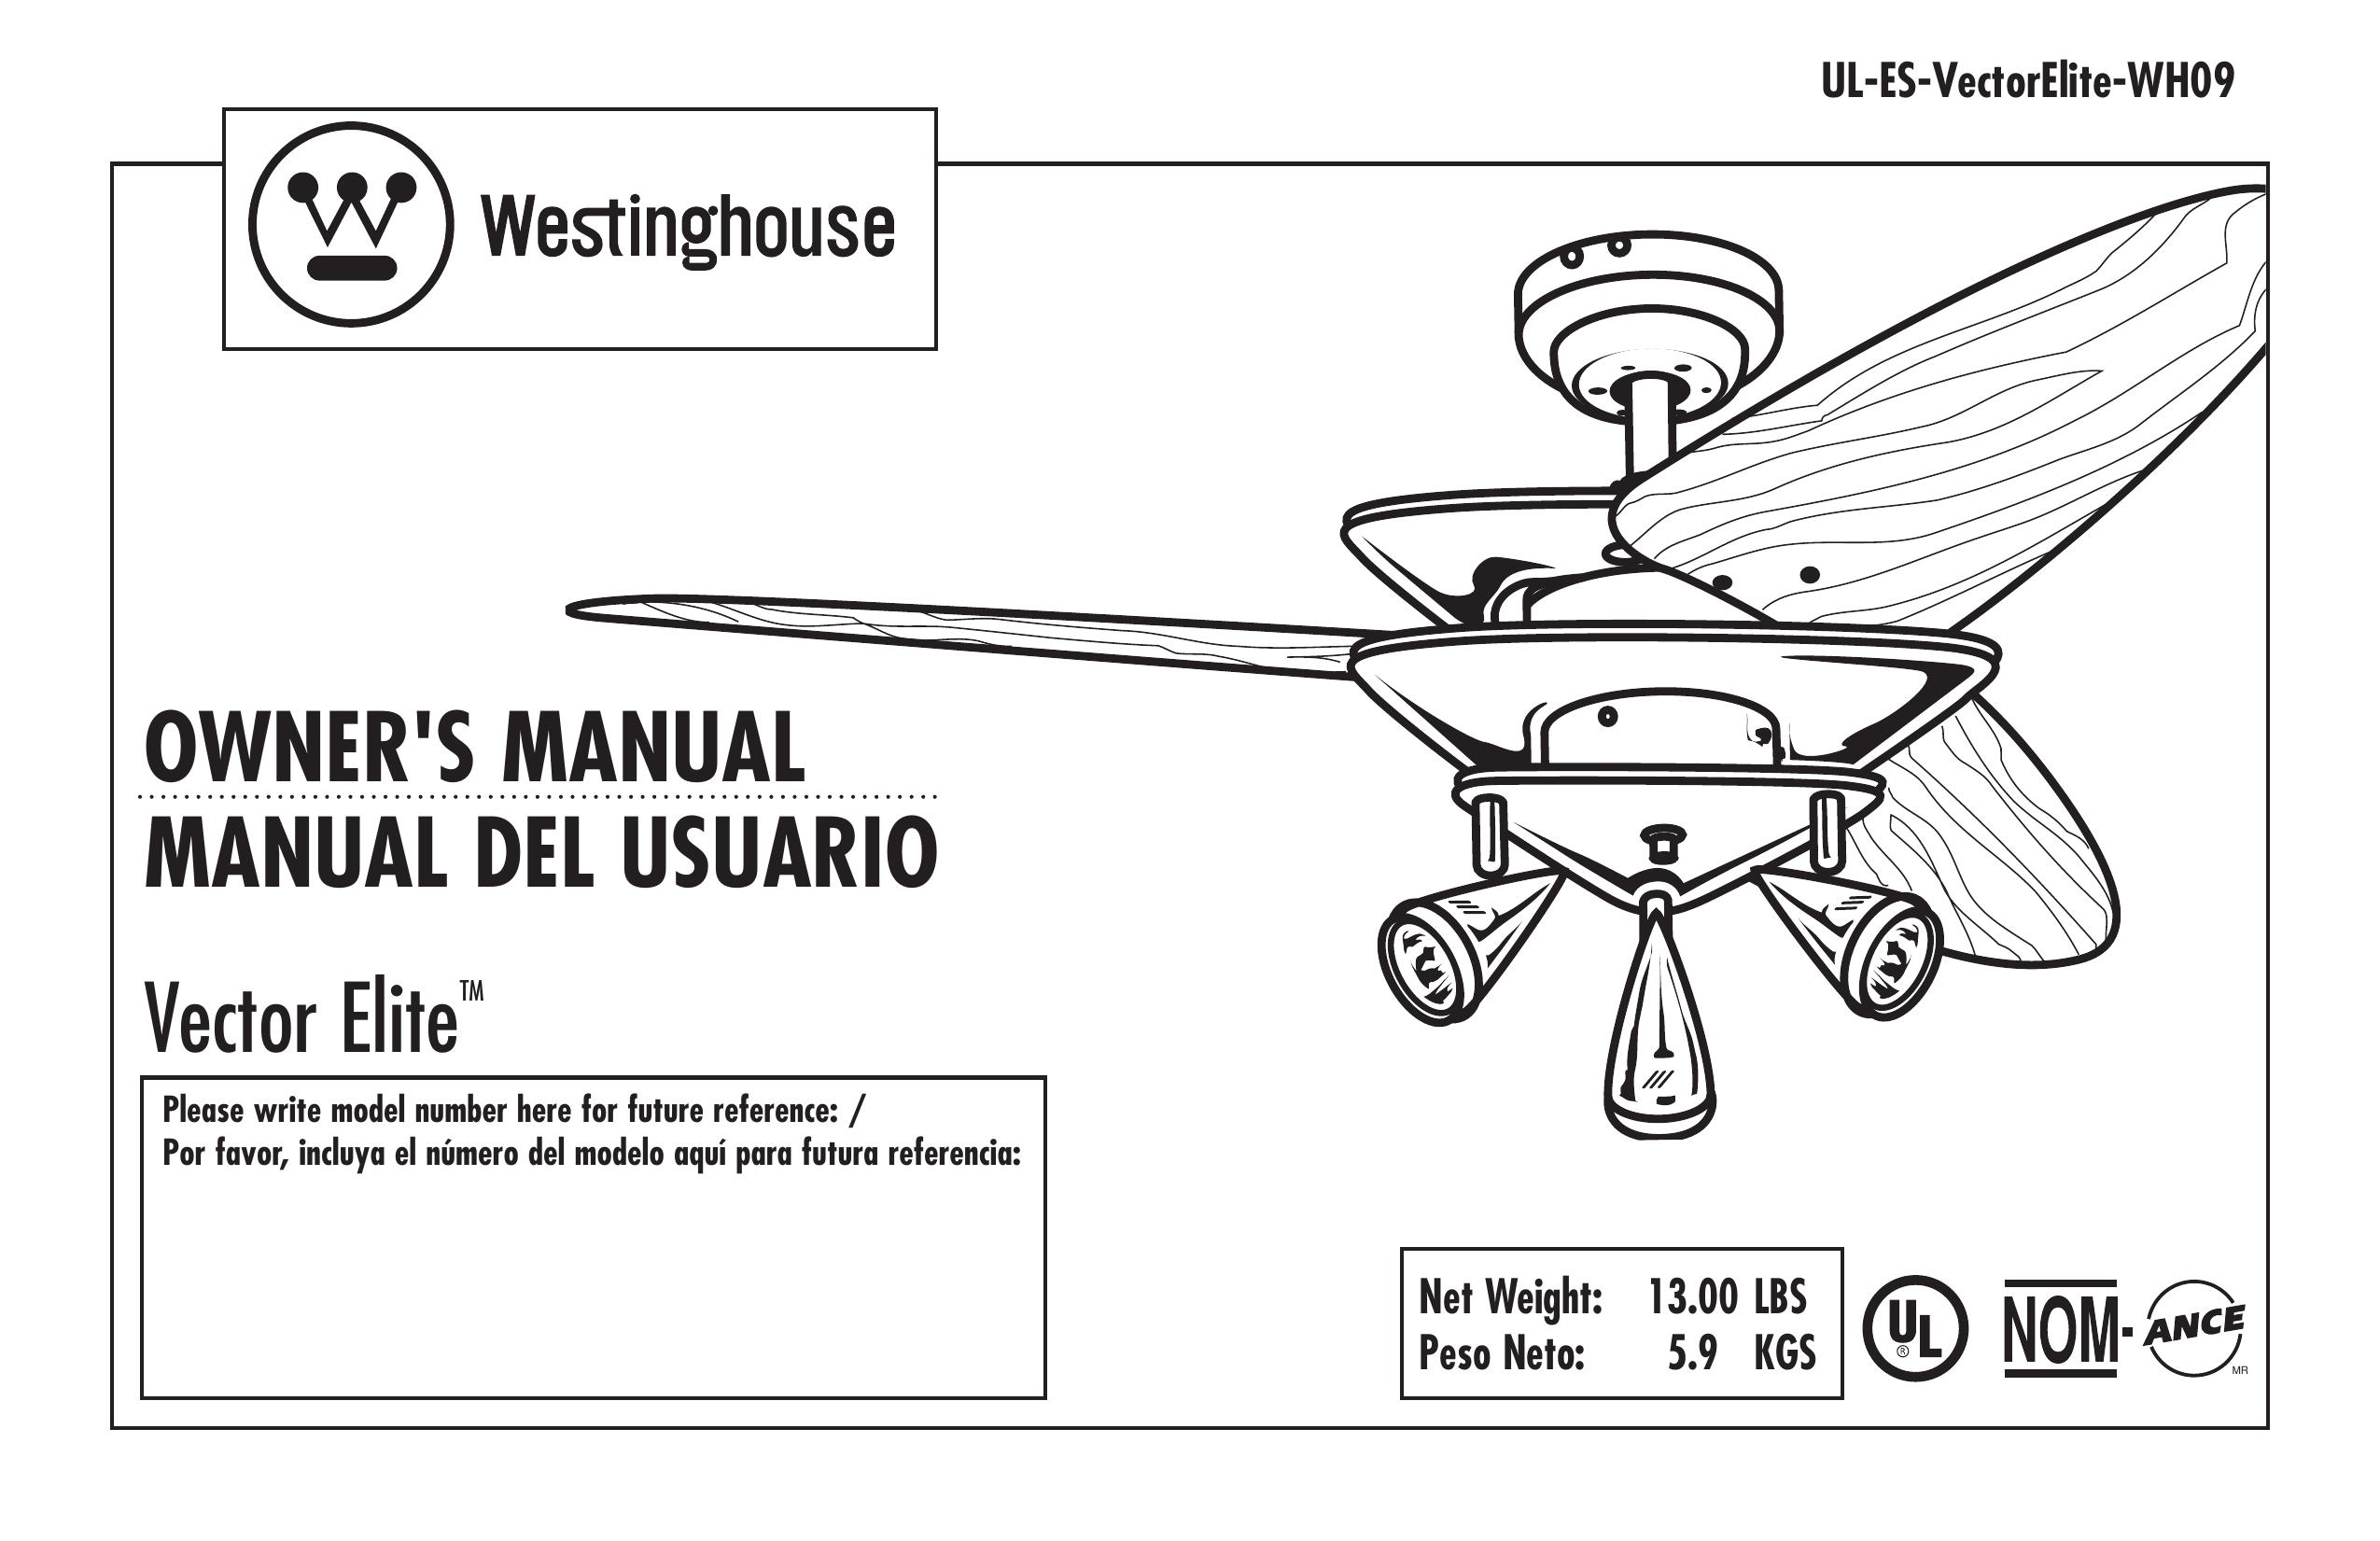 Westinghouse UL-ES-VectorElite-WH09 Outdoor Ceiling Fan User Manual